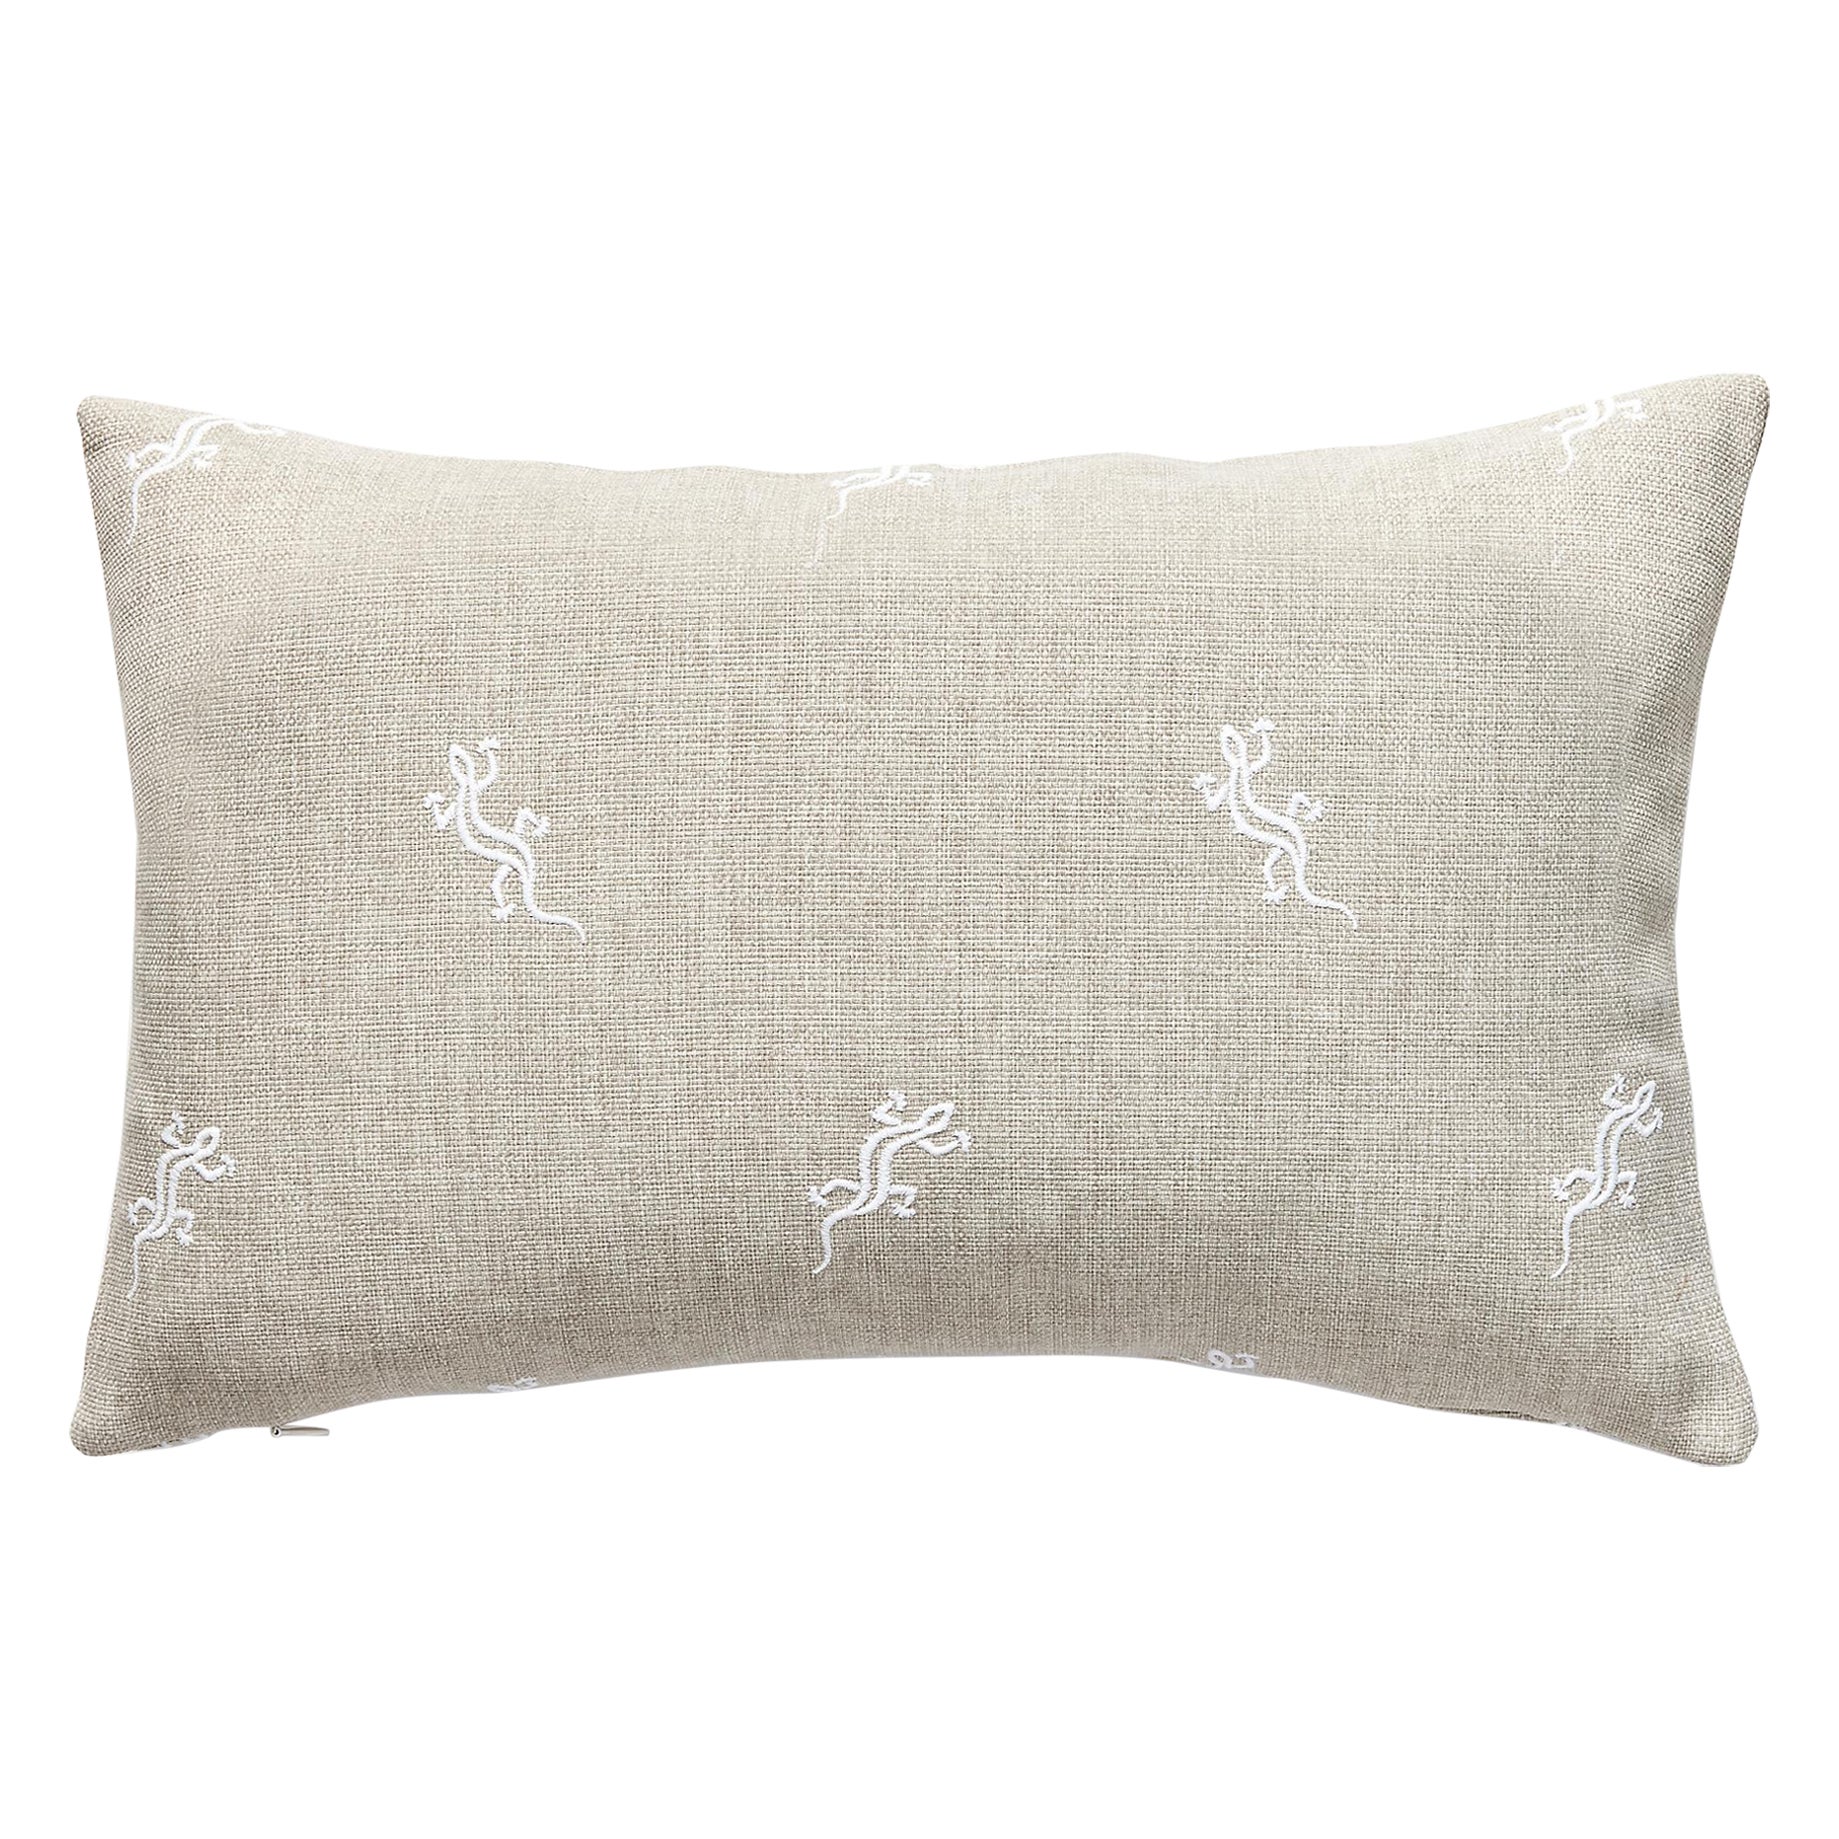 Gecko Outdoor Lumbar Pillow For Sale